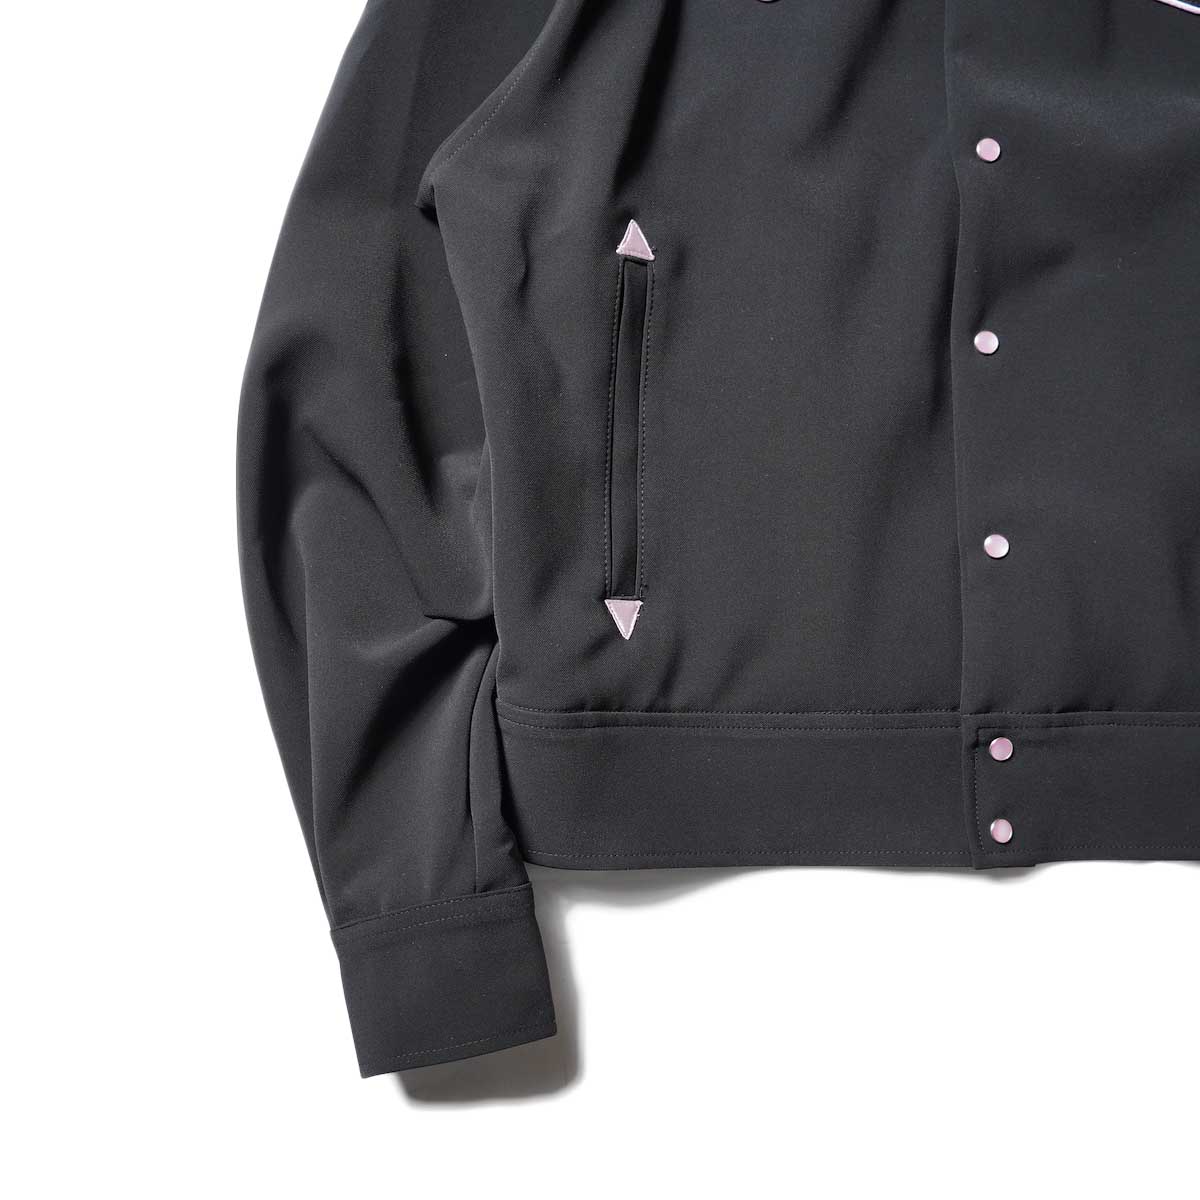 Needles / PIPING COWBOY JAC - PE/PU DOUBLE CLOTH (Black)袖・裾